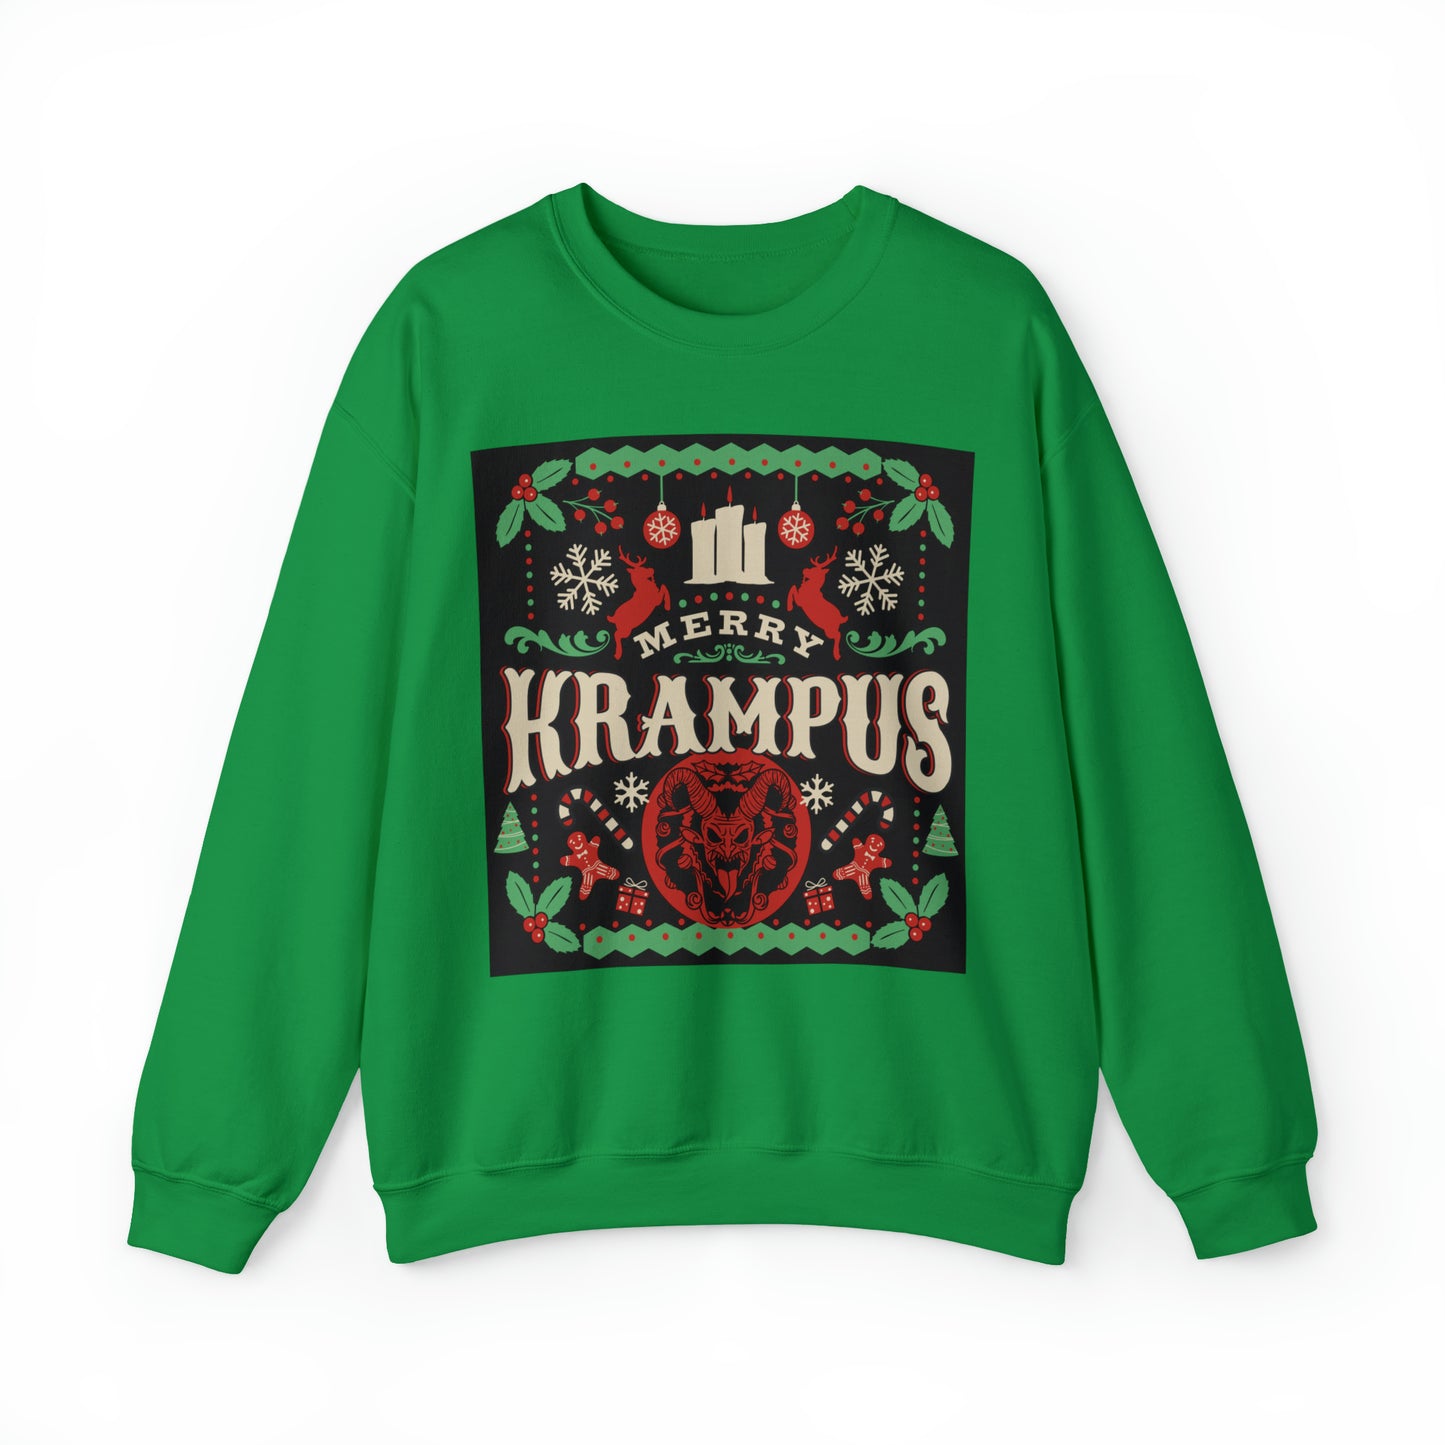 Merry Krampus Unisex Sweatshirt - Ugly Christmas Sweater